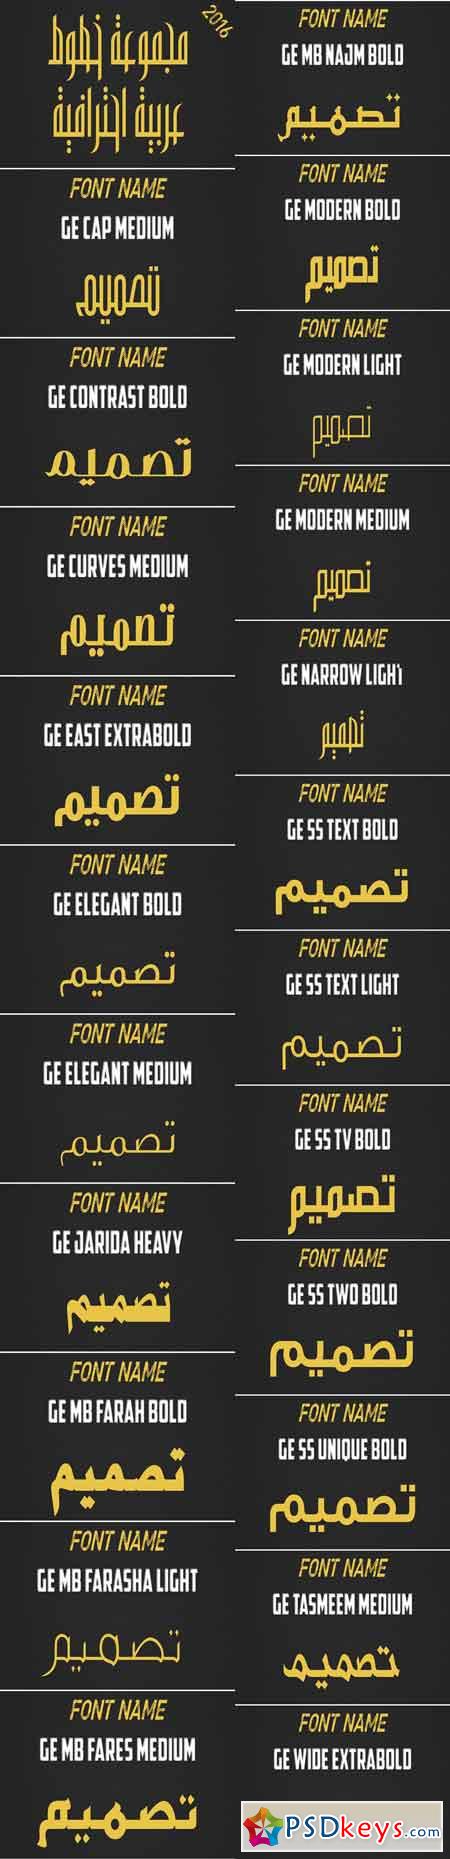 Arabic font GE 2016 » Free Download Photoshop Vector Stock image Via